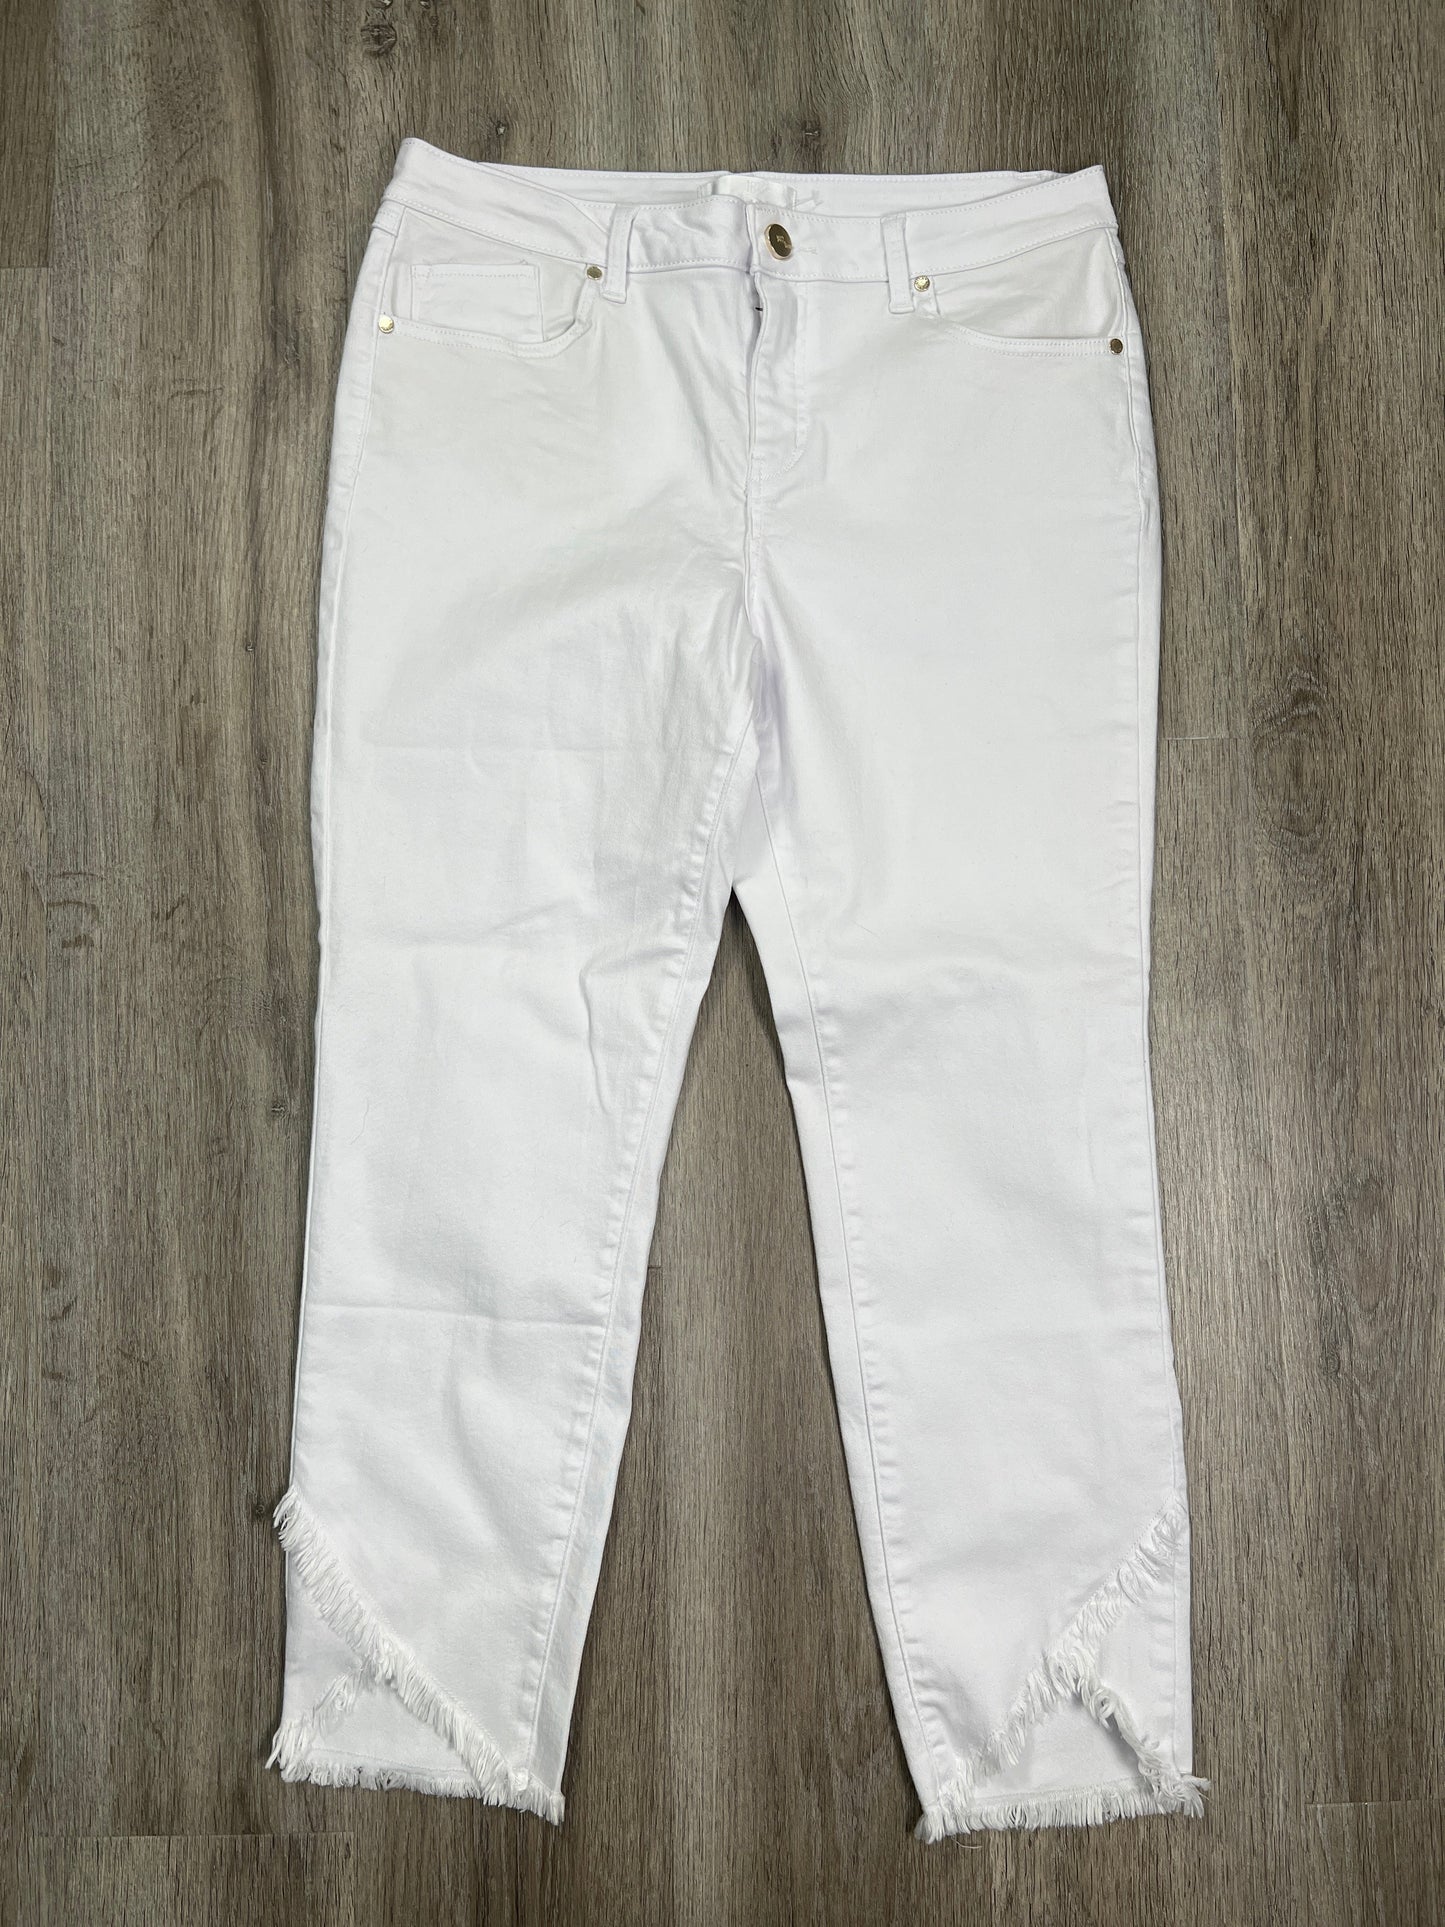 White Denim Jeans Cropped 1822 Denim, Size 16